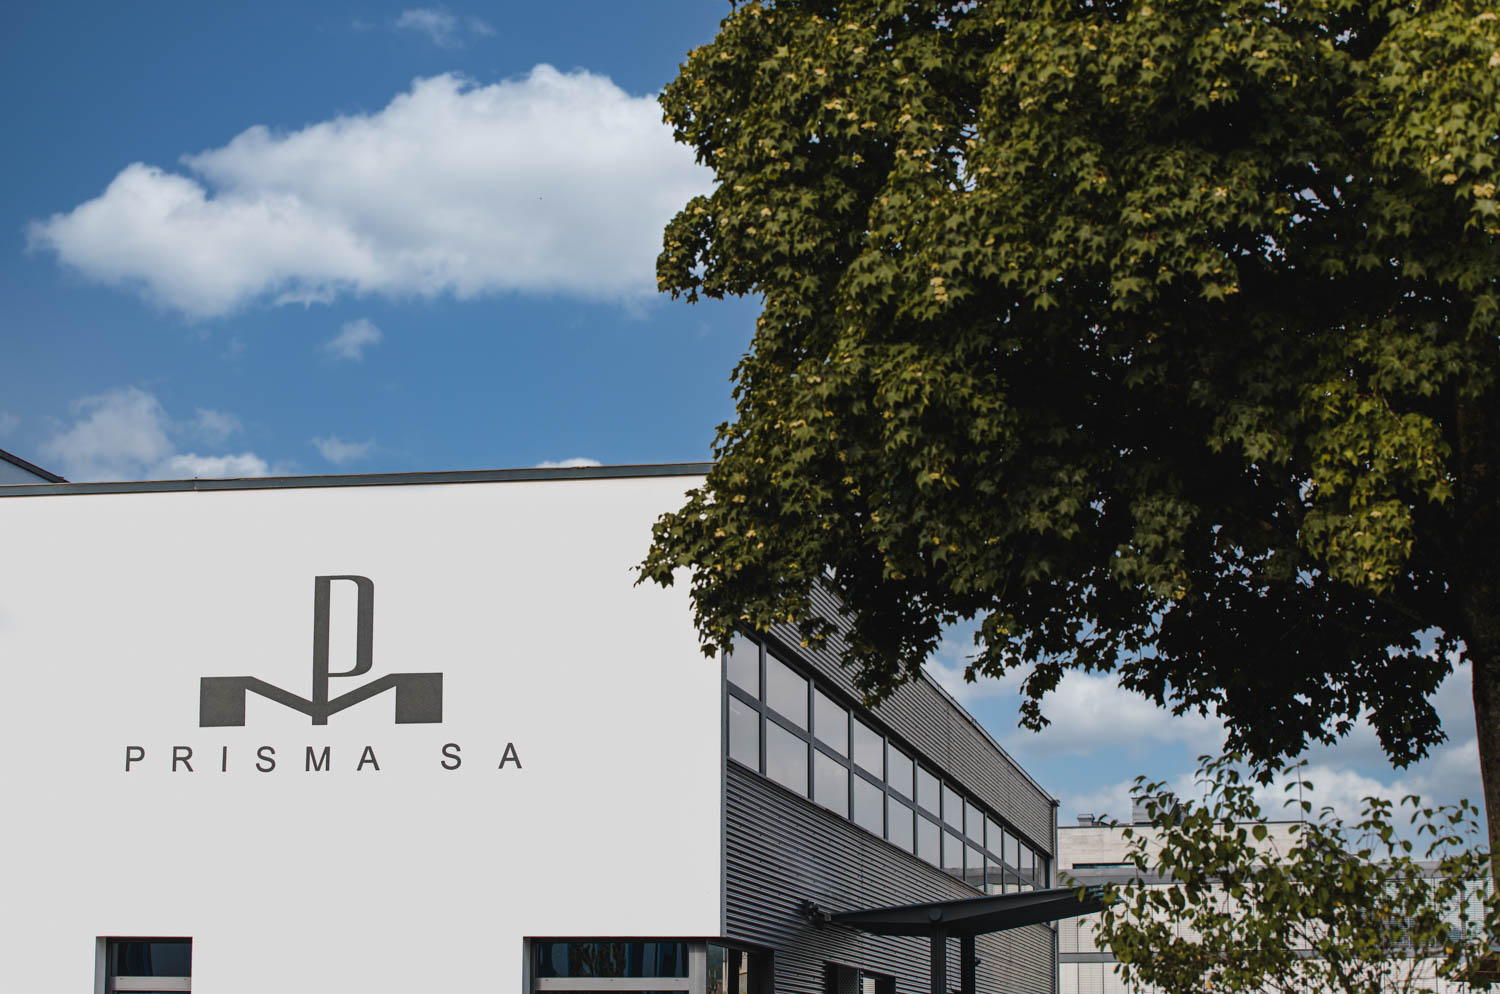 Building of the company Prisma SA